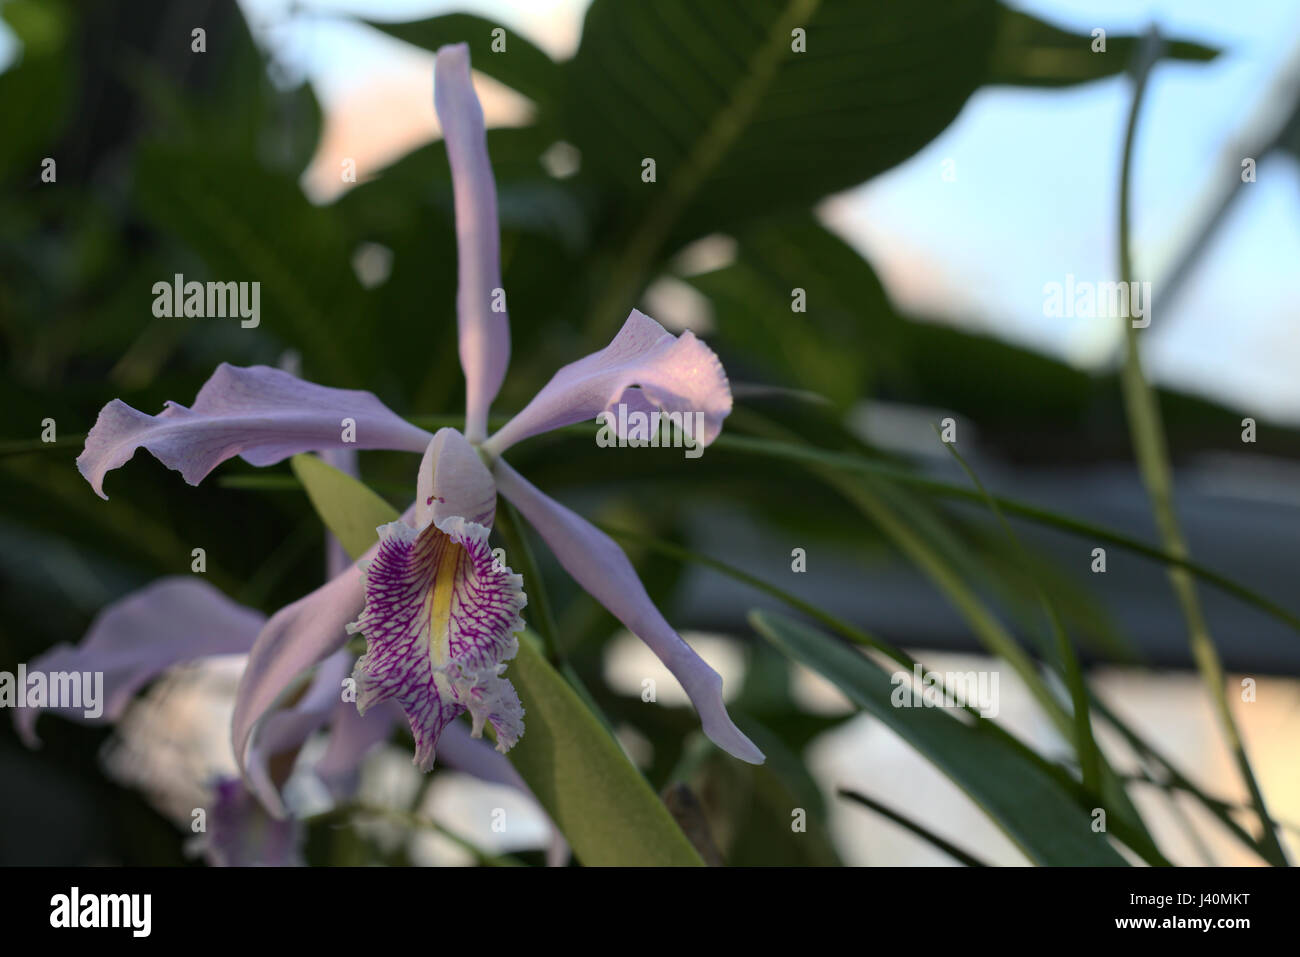 Cattleya maxima (Largest Cattleya), an orchid species. Stock Photo